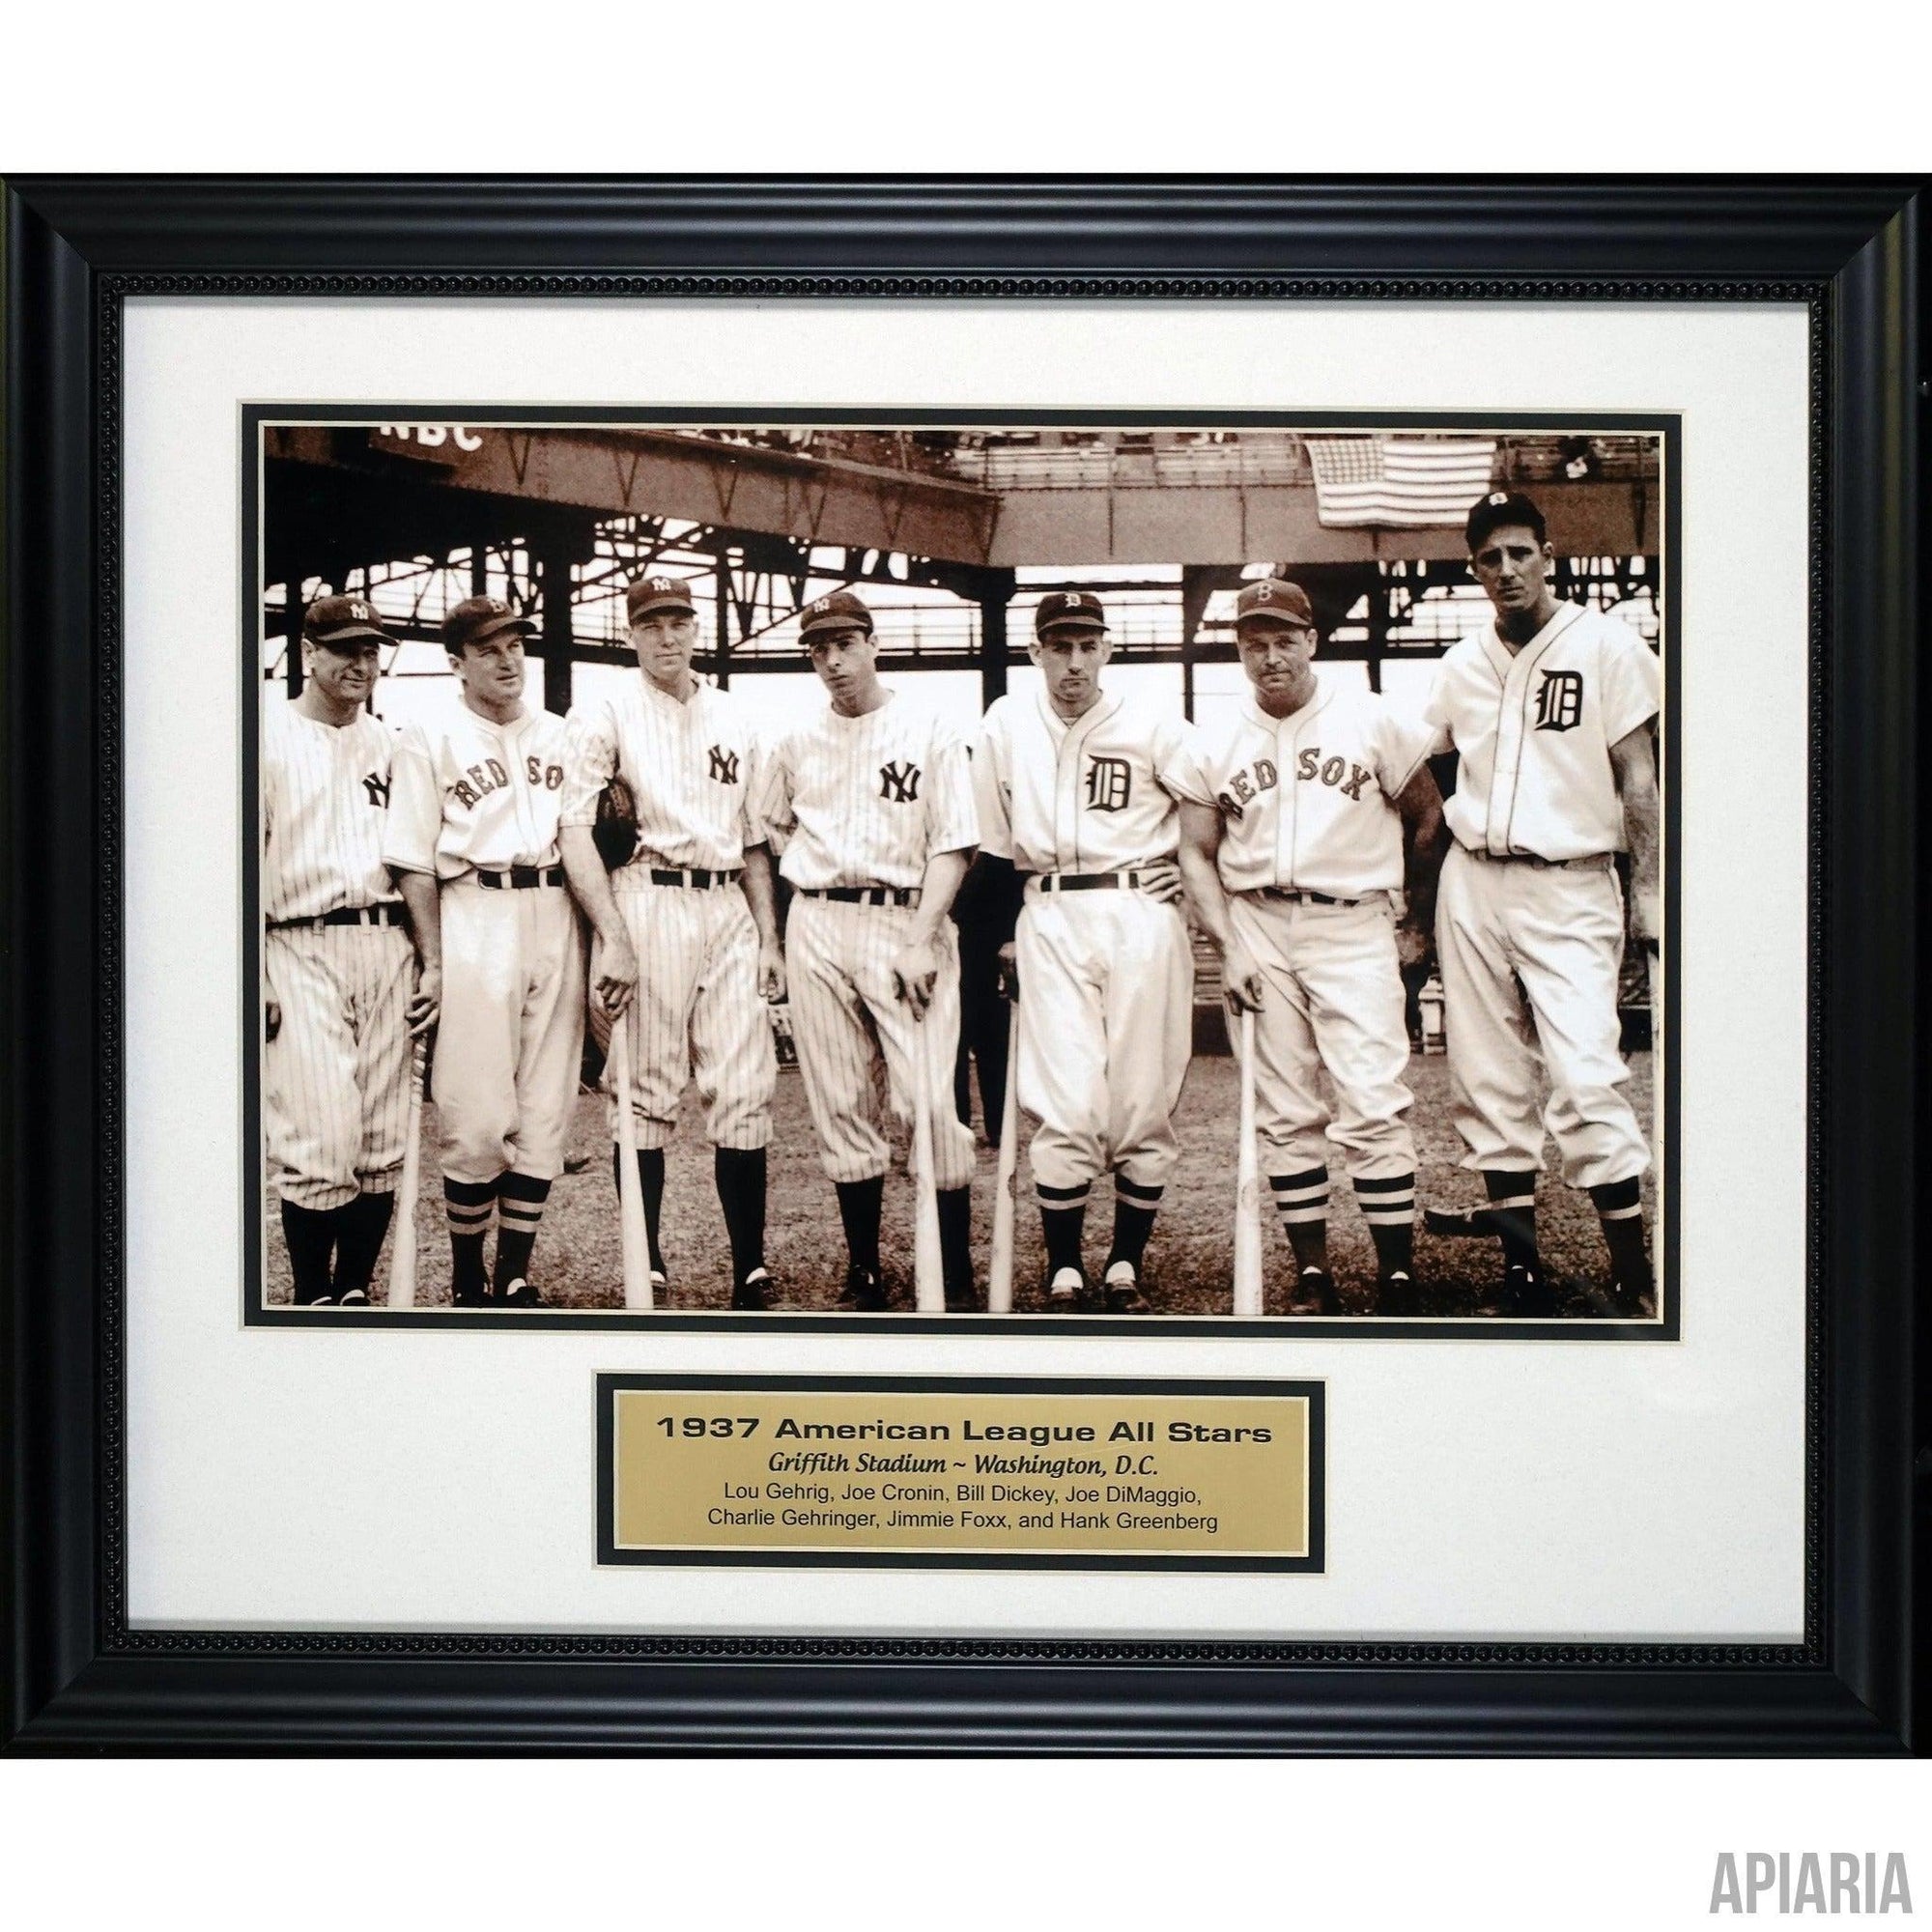 1937 American League All-Stars, Baseball Memorabilia Hall of Fame-Framed Item-Apiaria